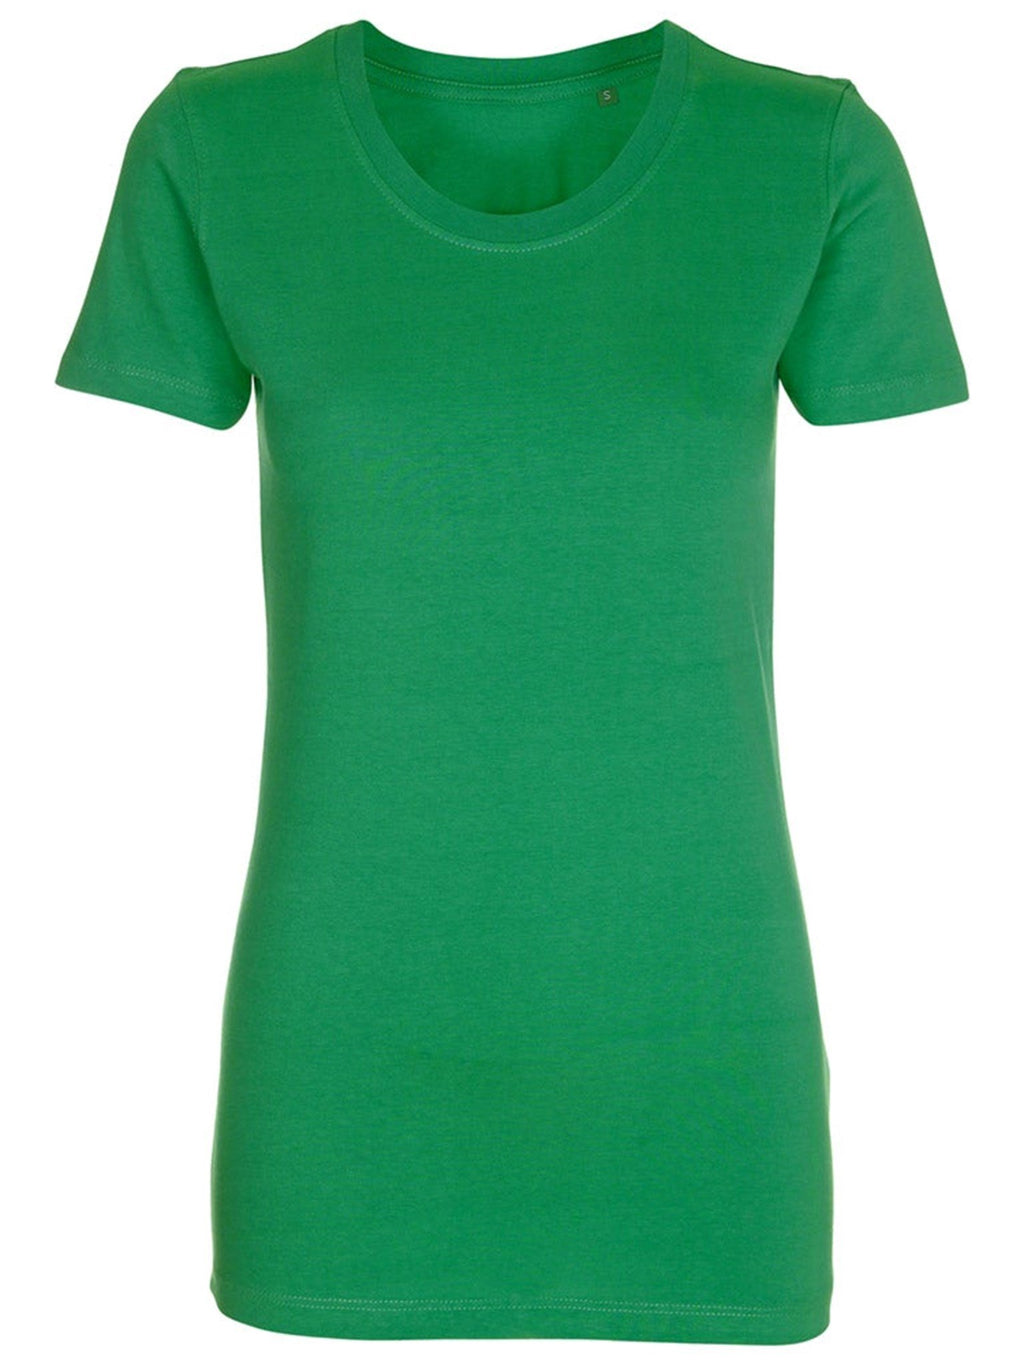 Fitted t-shirt - Grøn